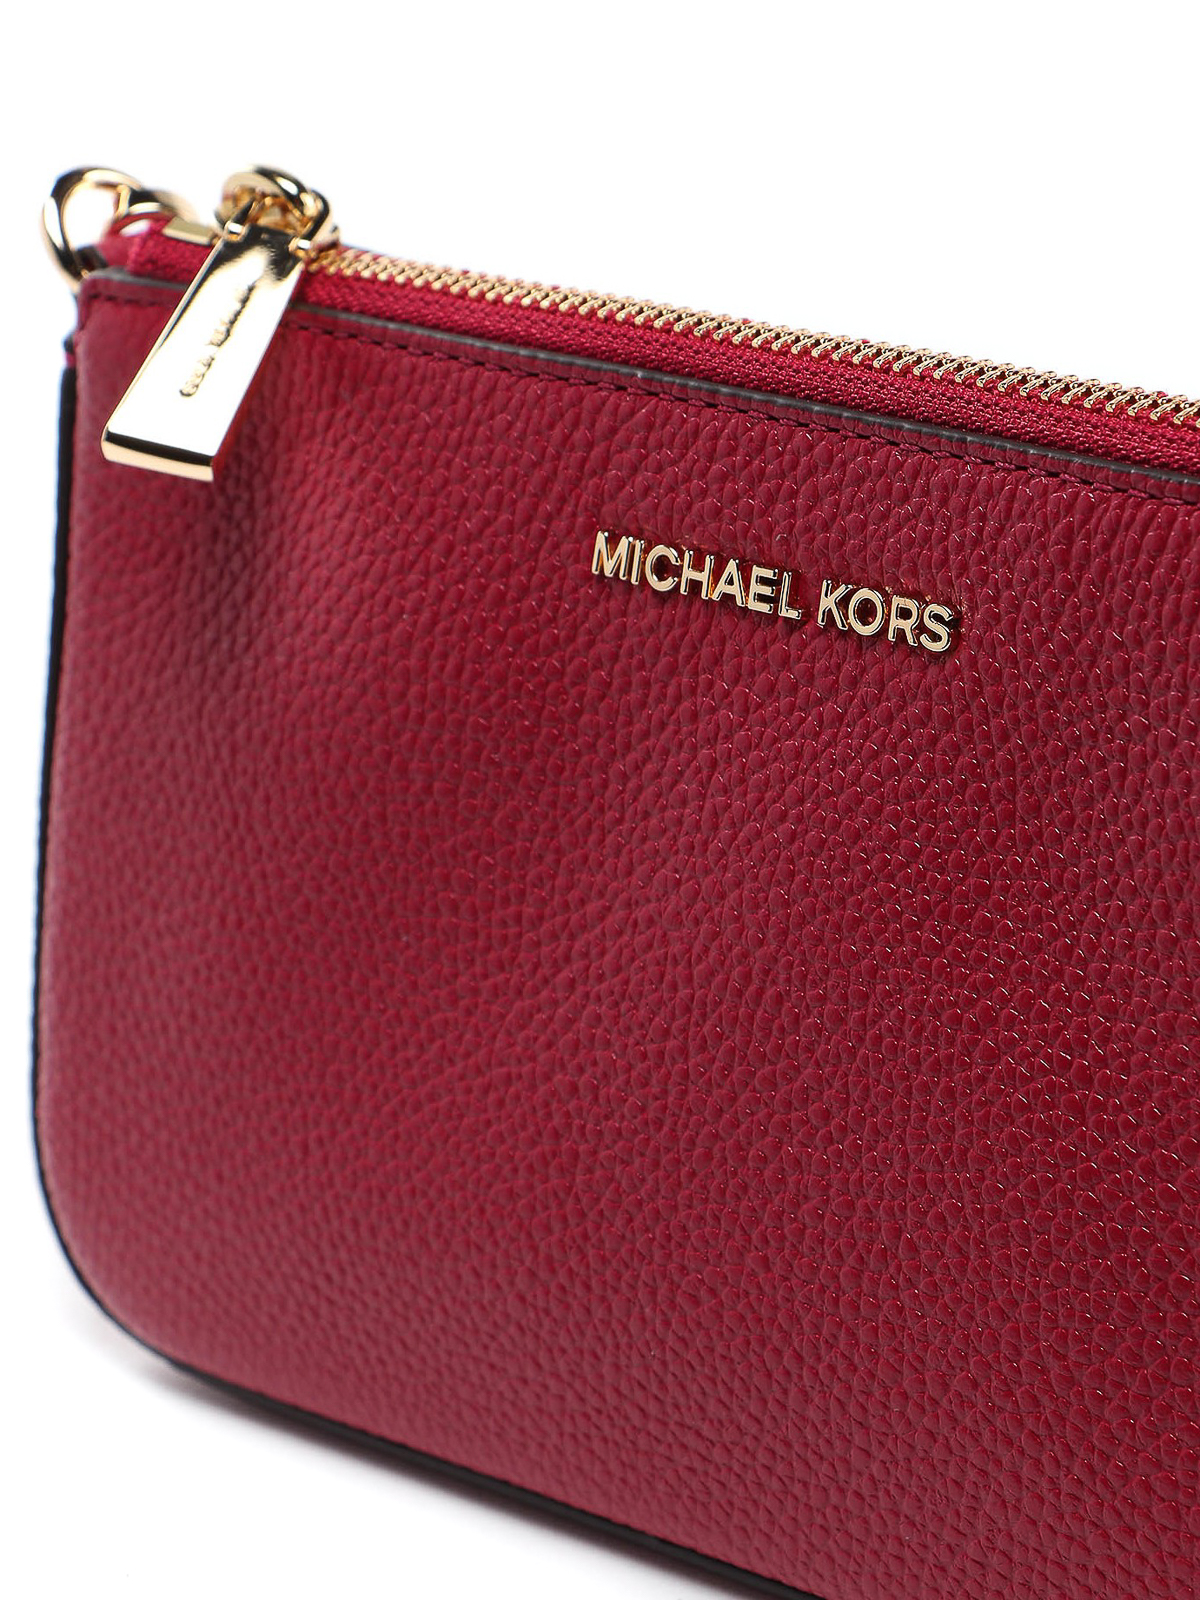 Buy Michael Kors Jet Set MD Chain Pouchette Bag